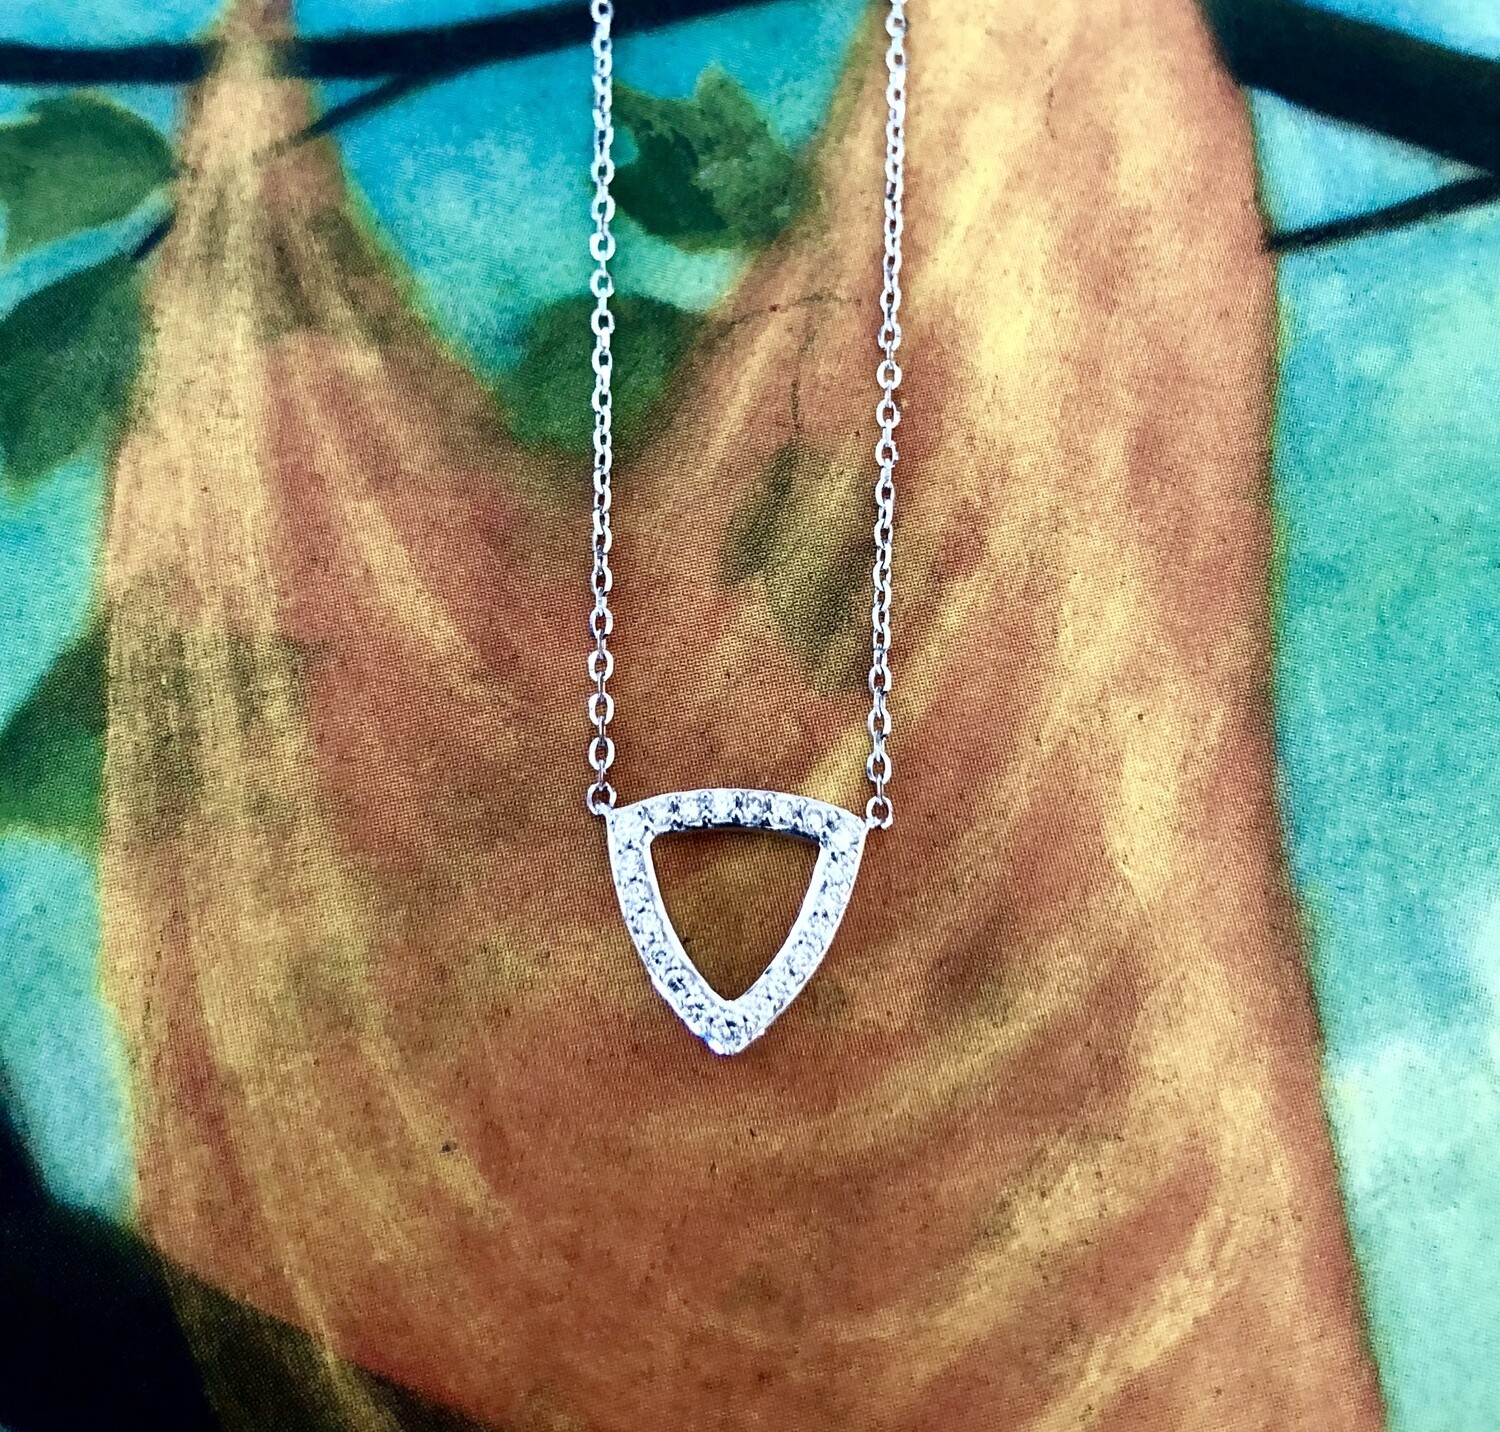 Open Triangle Diamond Necklace